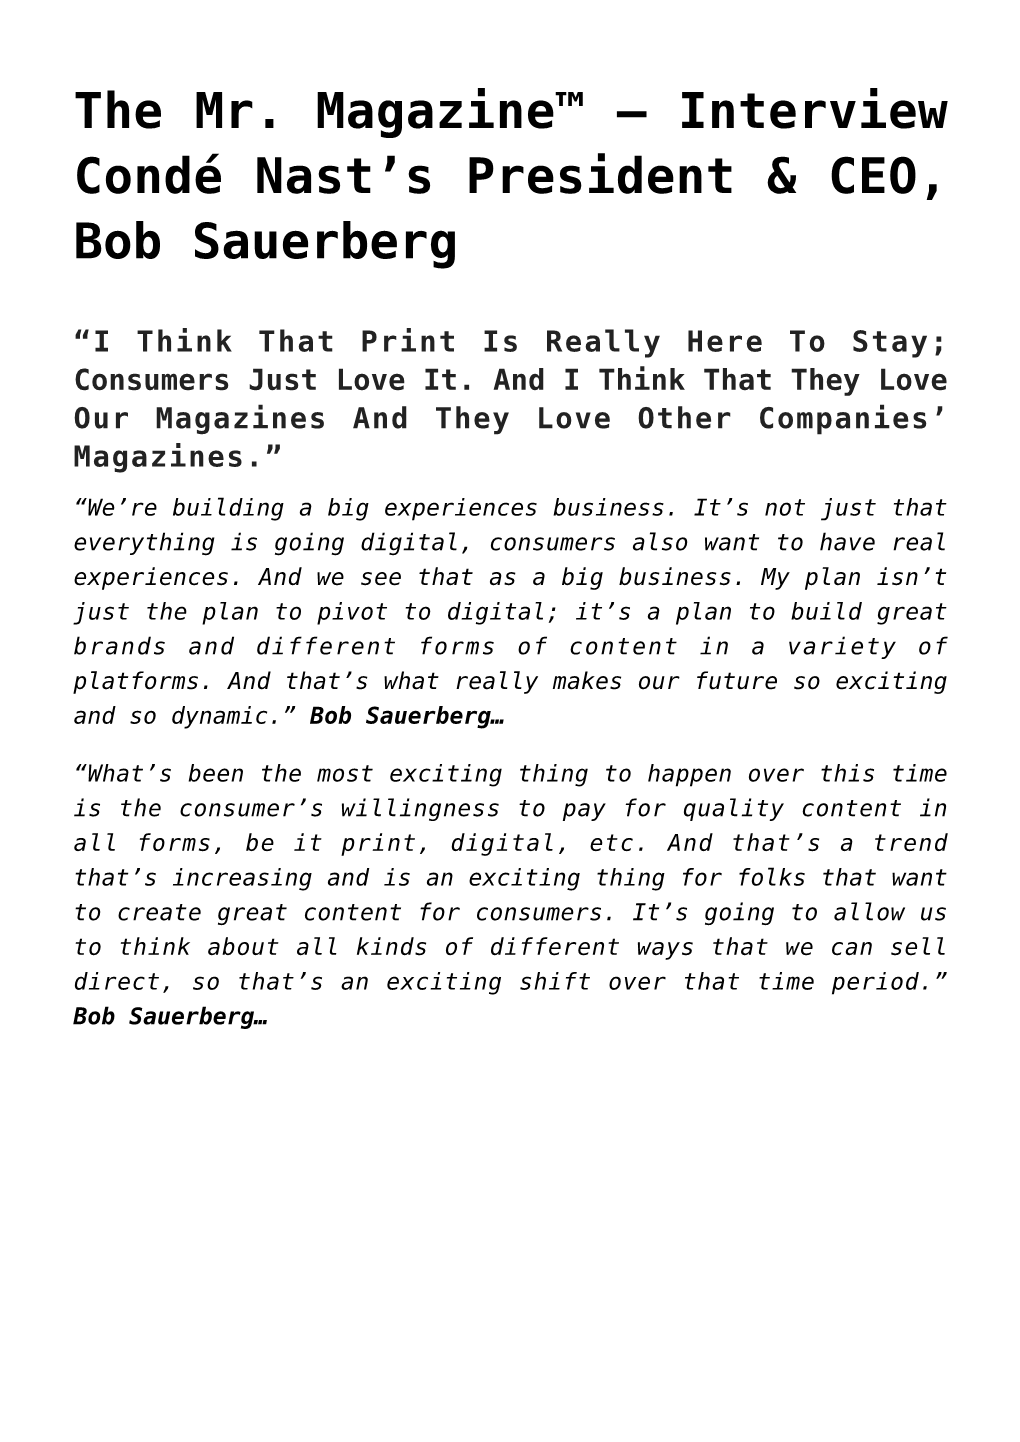 Interview Condé Nast's President & CEO, Bob Sauerberg